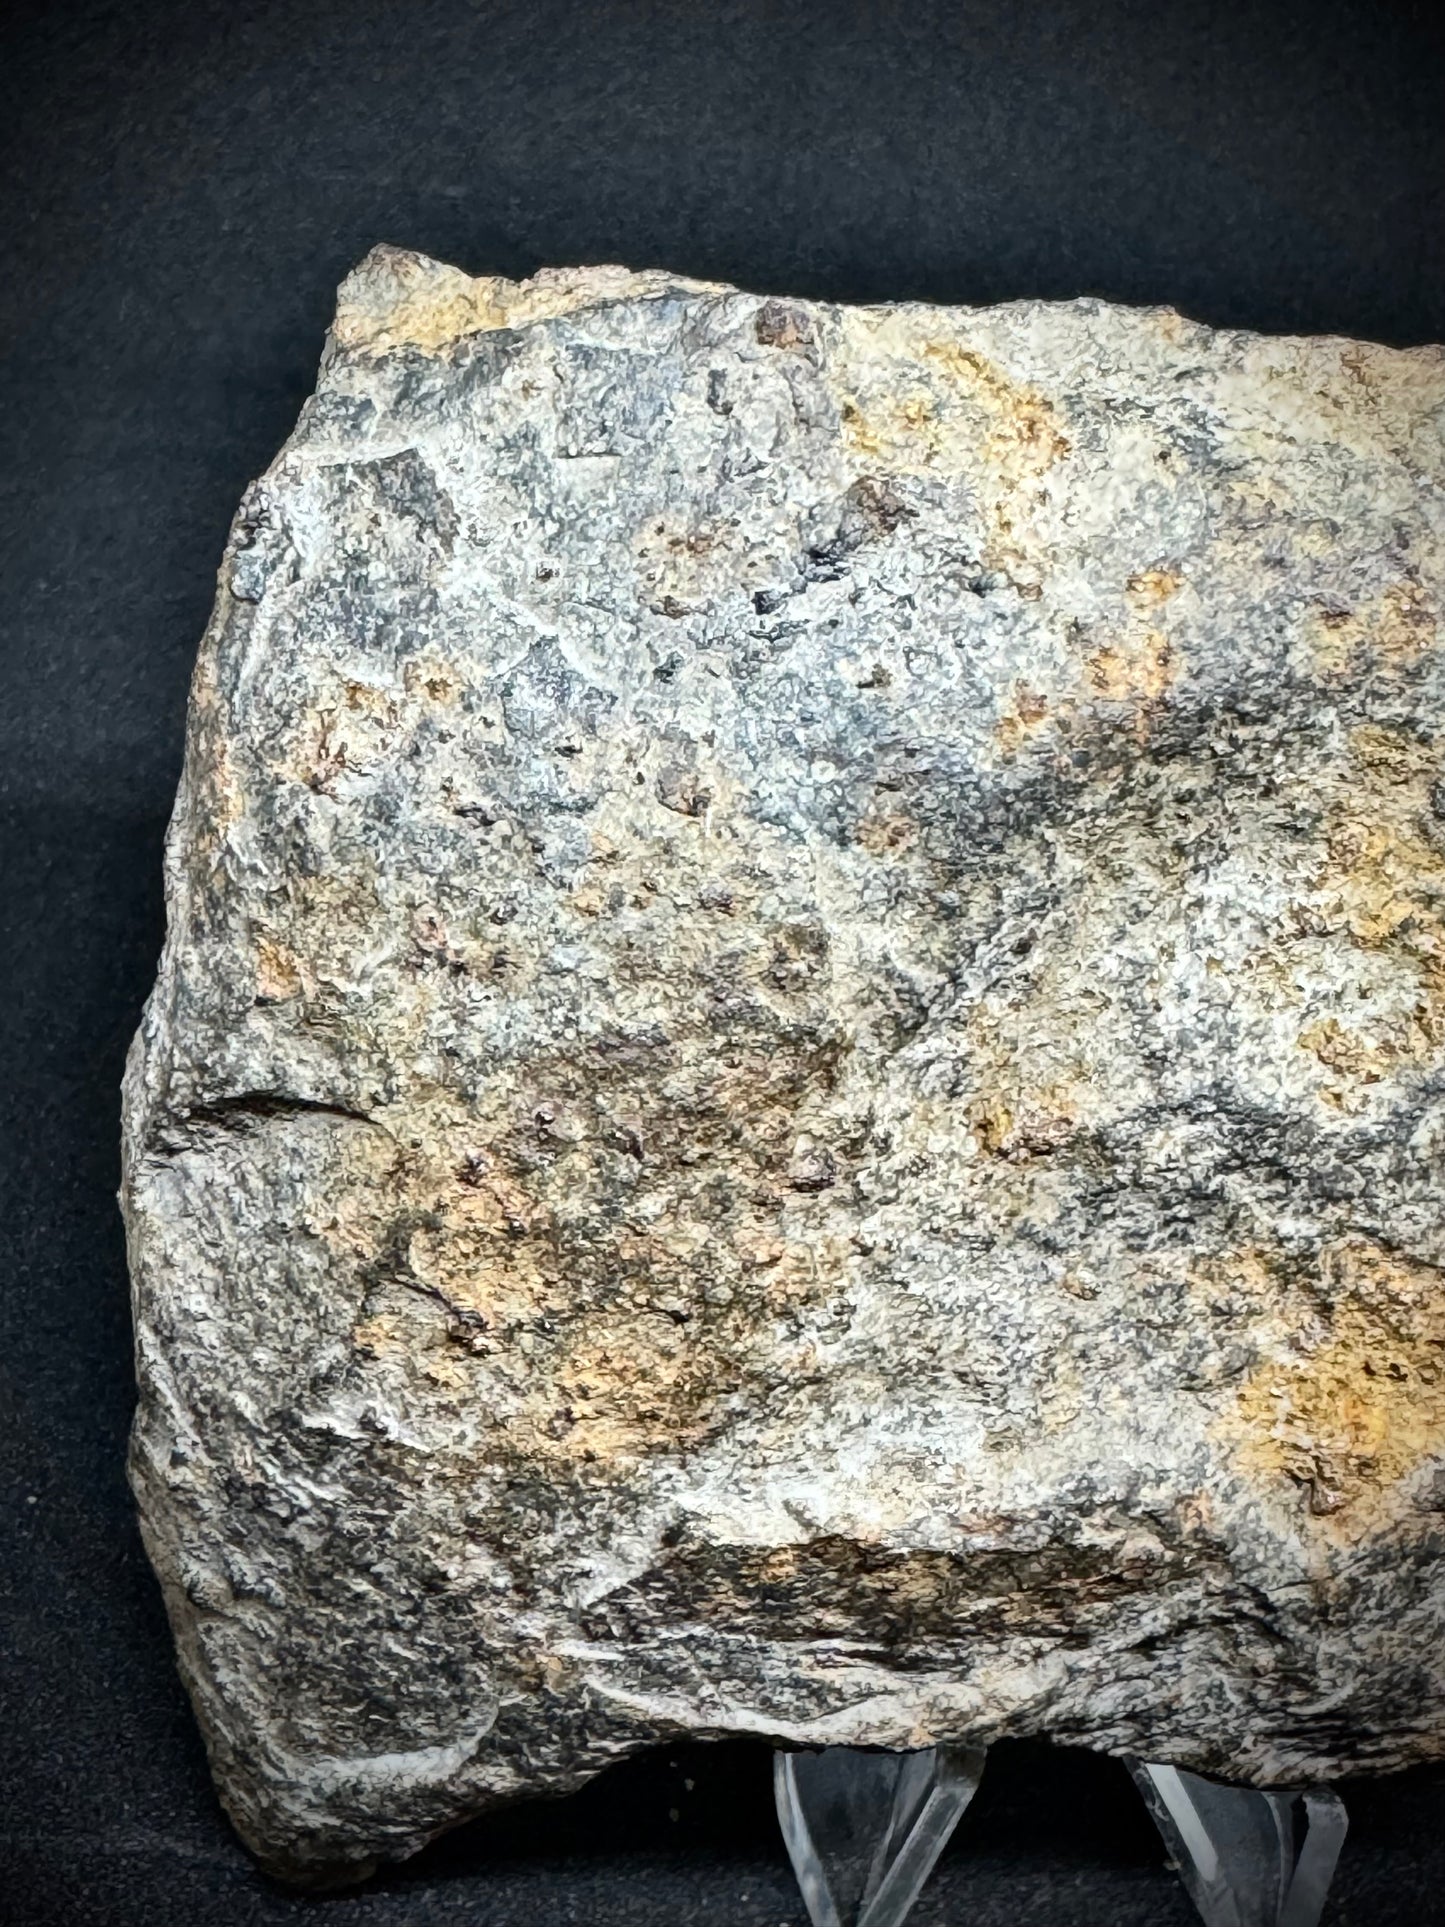 Aba Panu Meteorite - Tracked by NASA! Stunning Chondrules - 276.8g